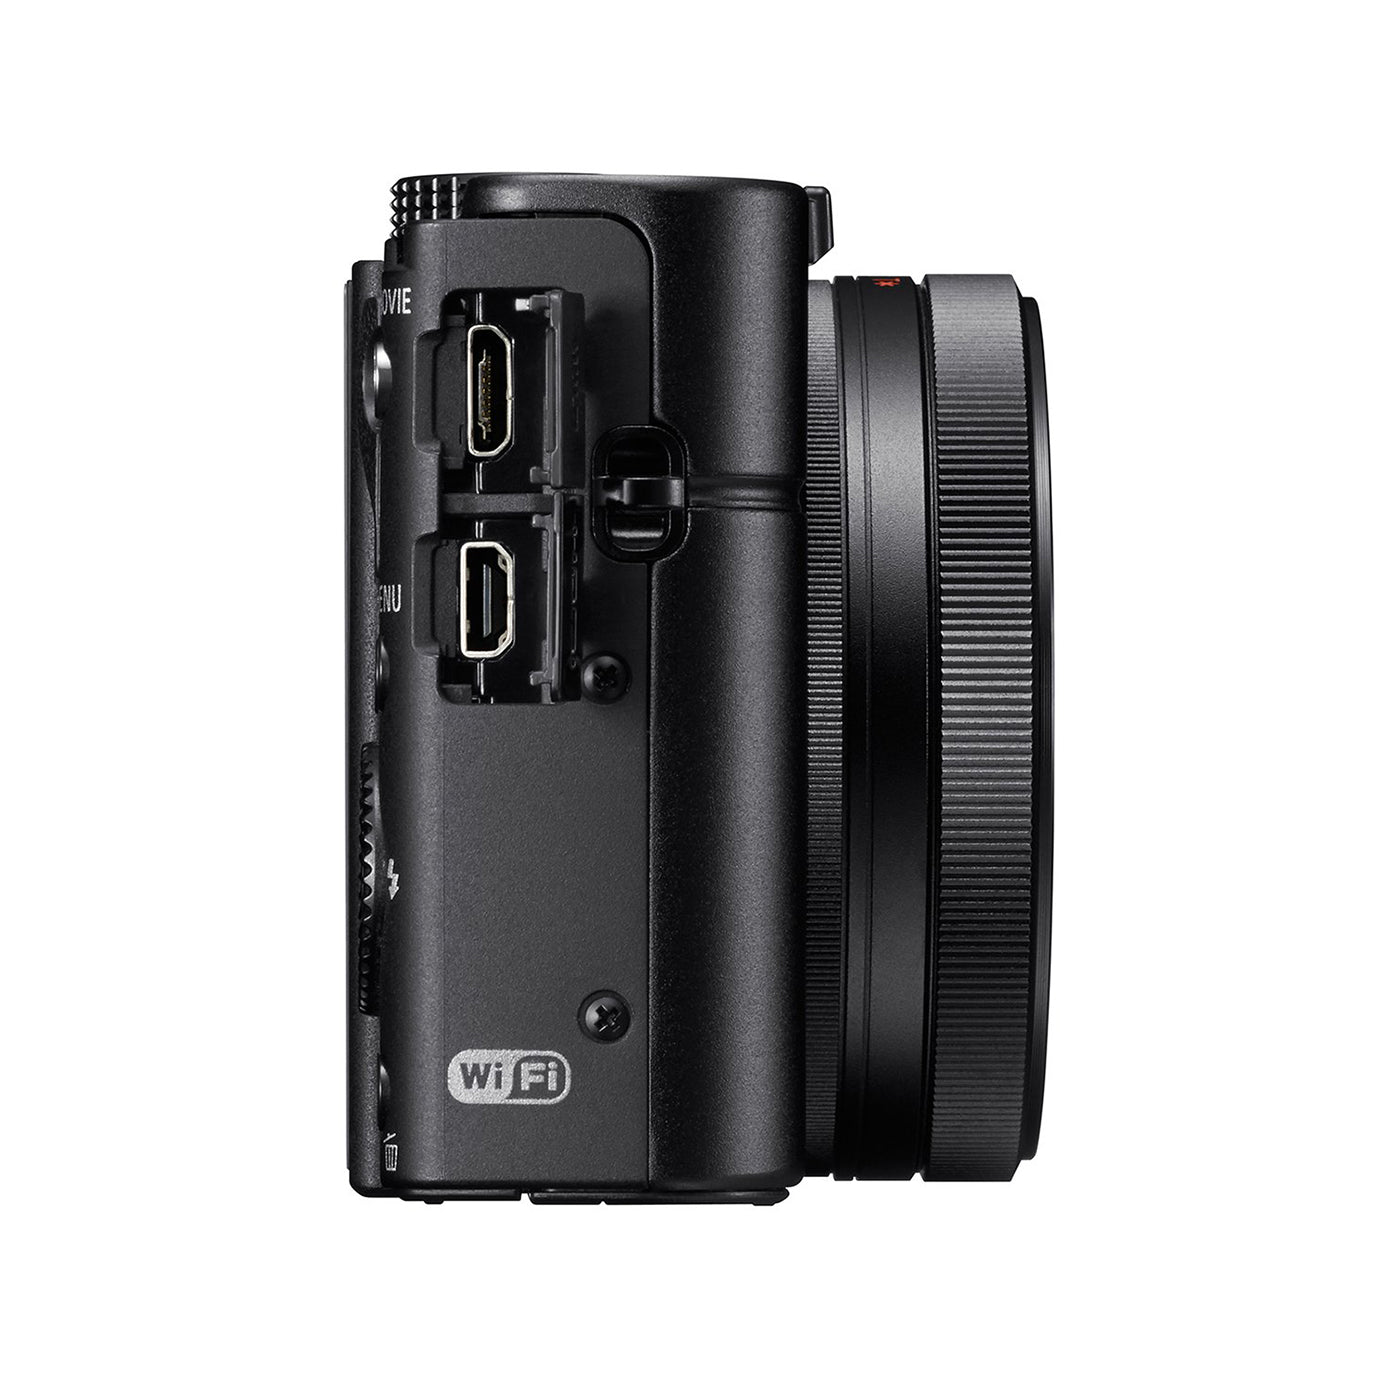 DSC-RX100 III Advanced Camera with 1.0-type sensor